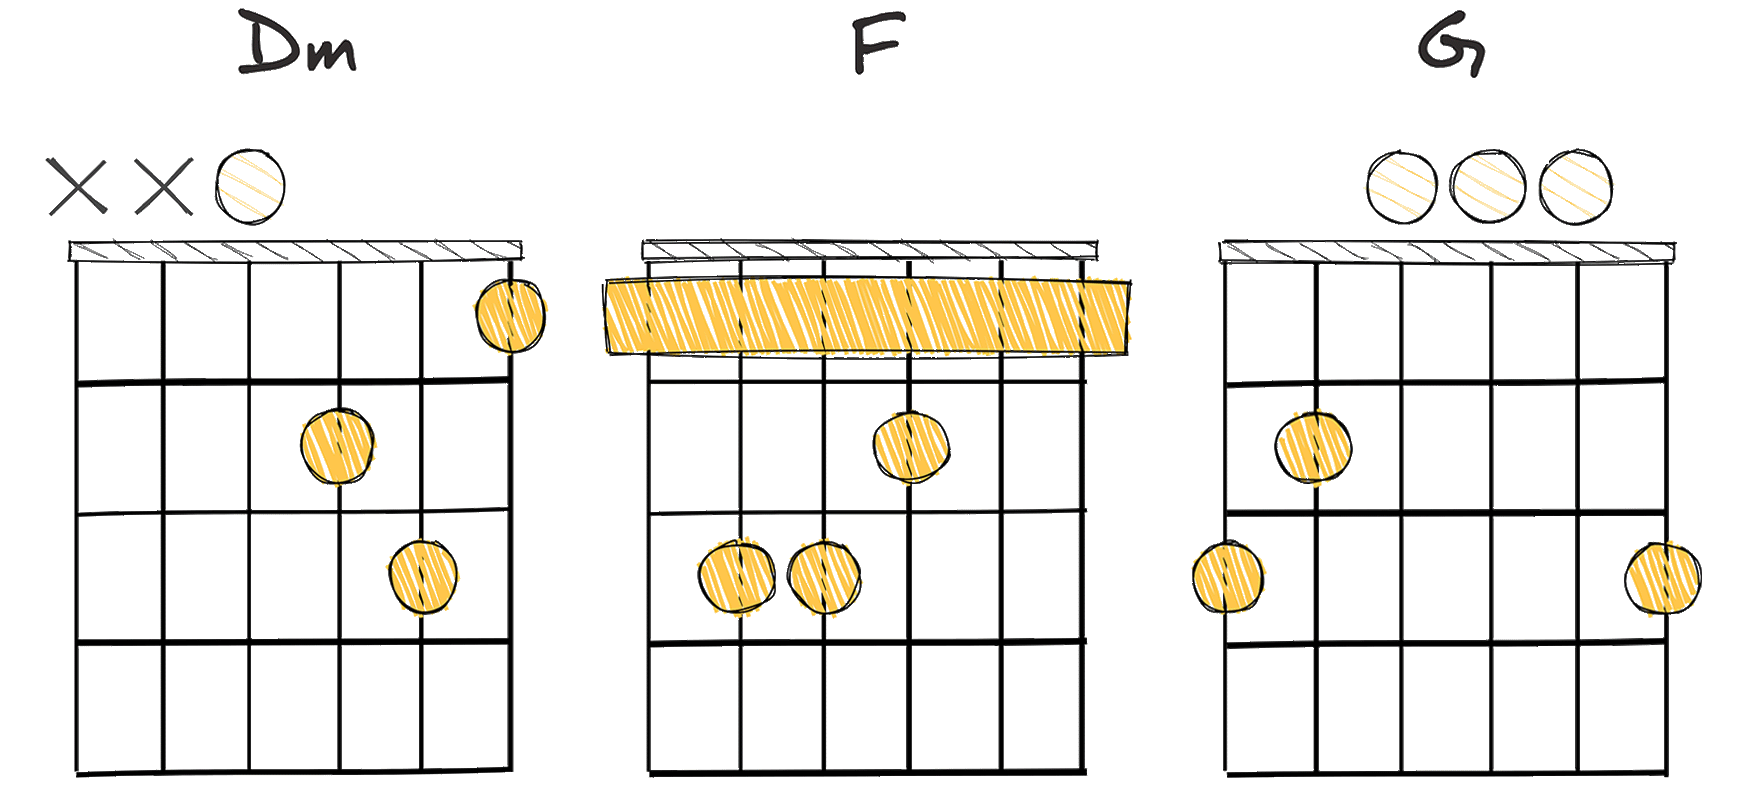 ii-IV-V (2-4-5) chords diagram